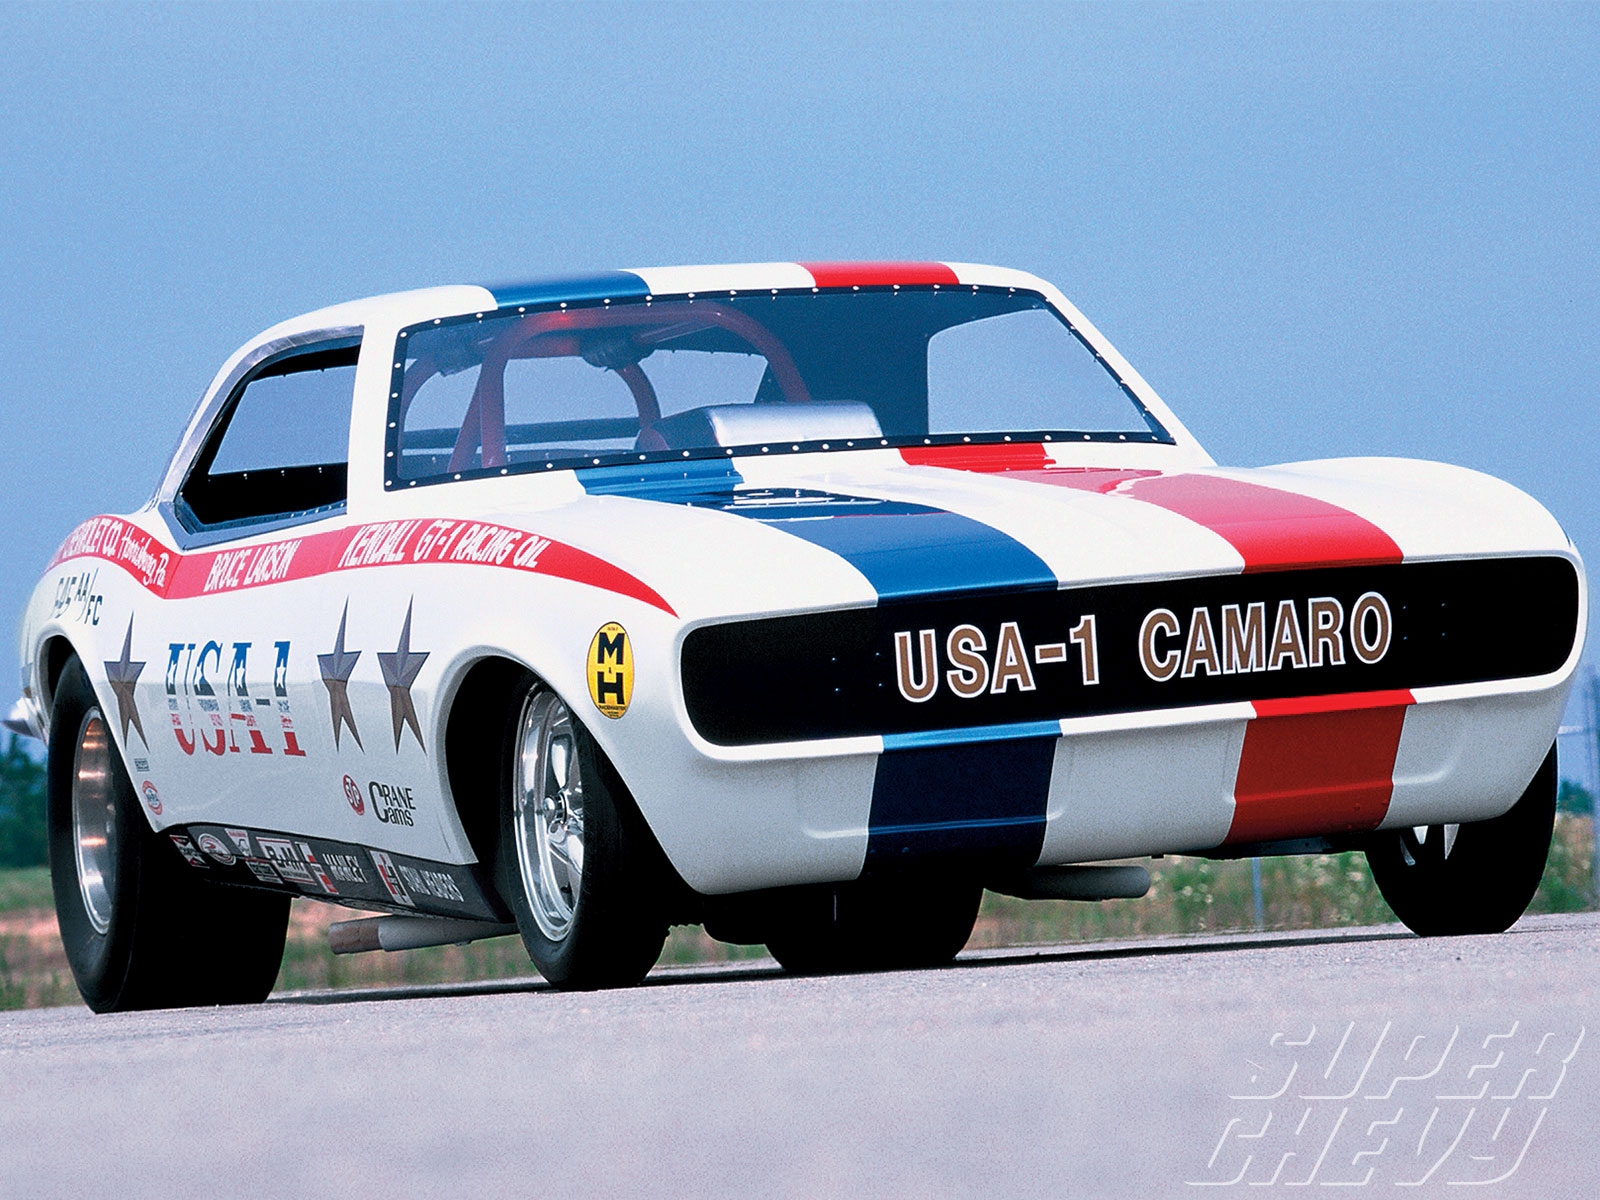 Chevy Camaro Super Stock Drag Racing Race Cars Hot Rod Custom